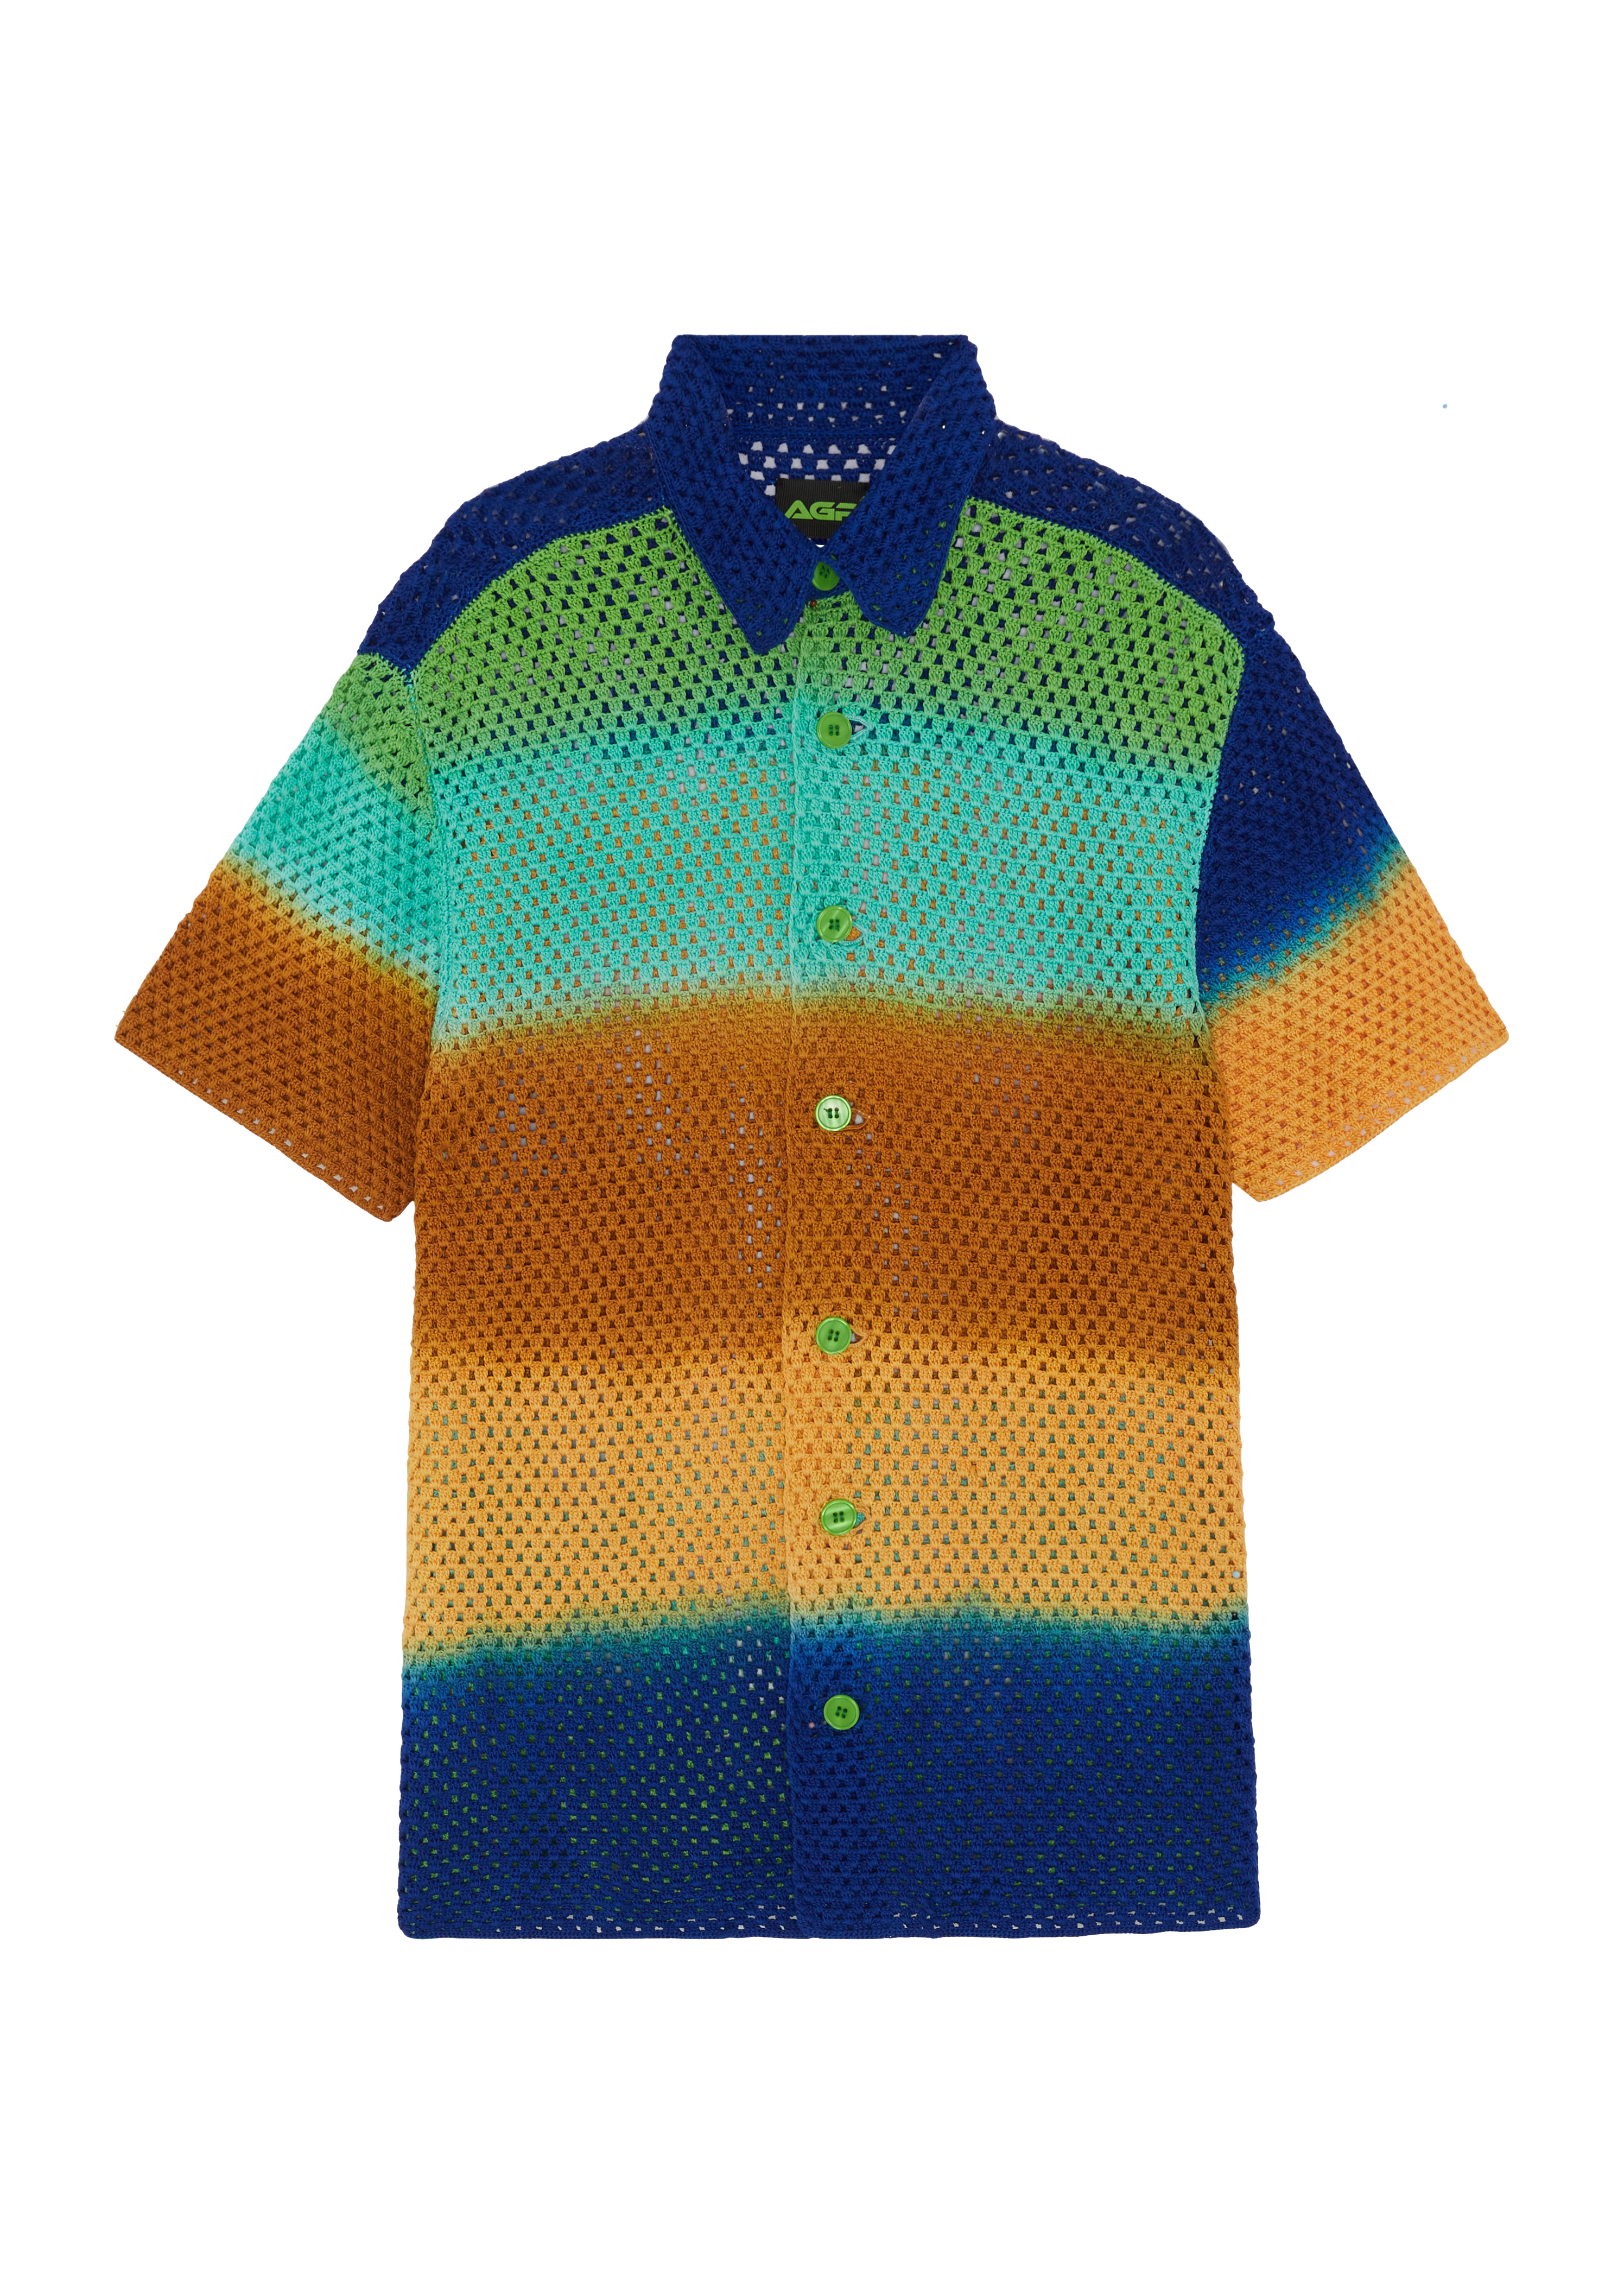 agr - wellness crochet shirt - packshot - front